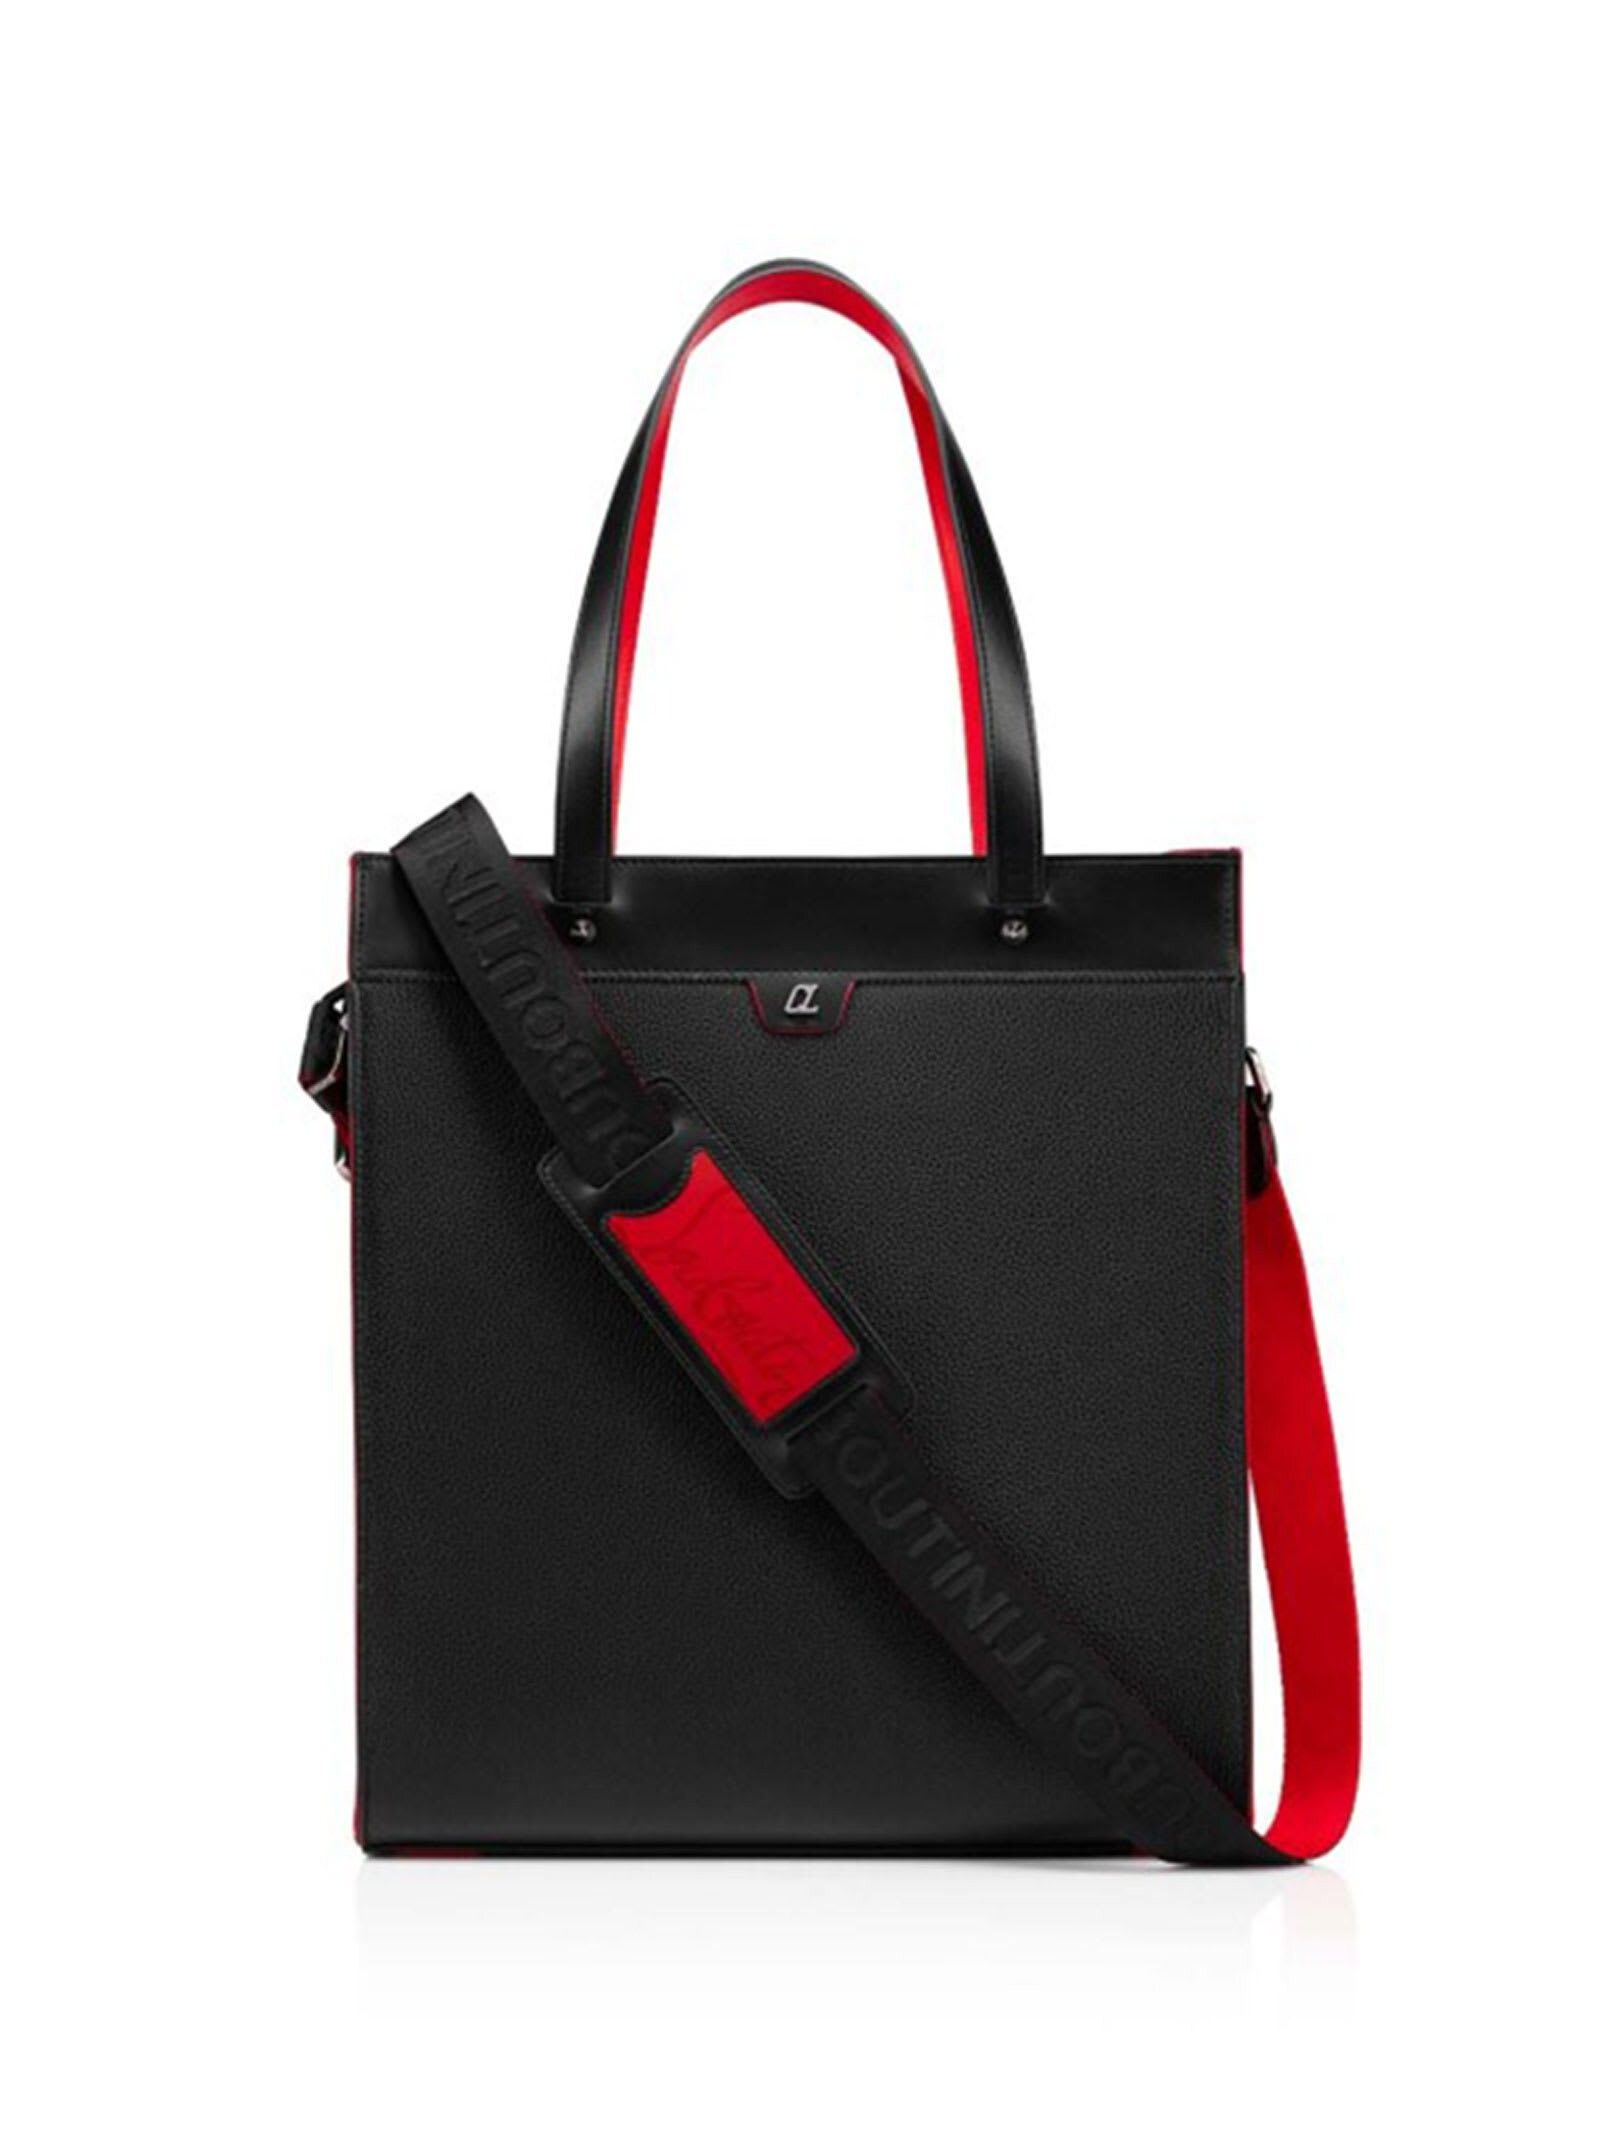 Christian Louboutin Christian Louboutin Tote Bag Black Red Leather ...